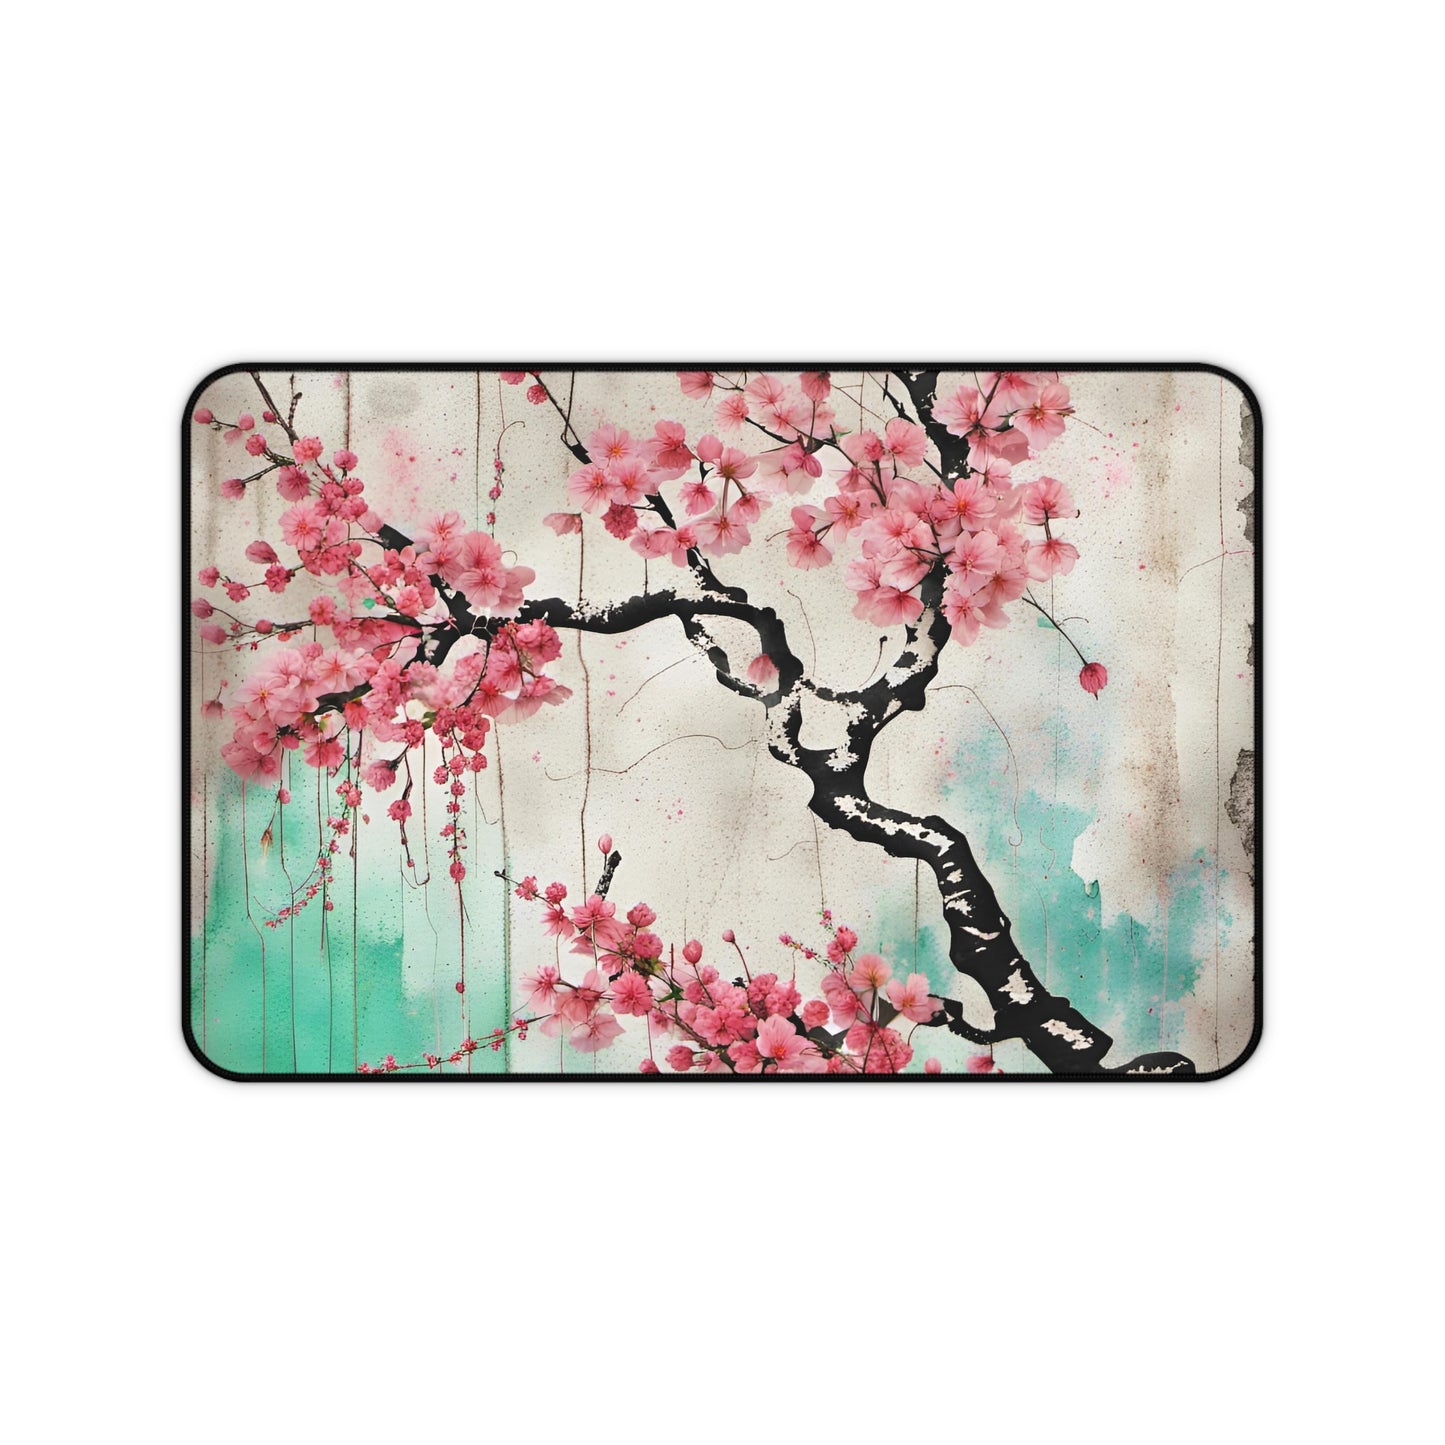 Cherry Blossoms Street Art Style Printed on Desk Mat 12x18